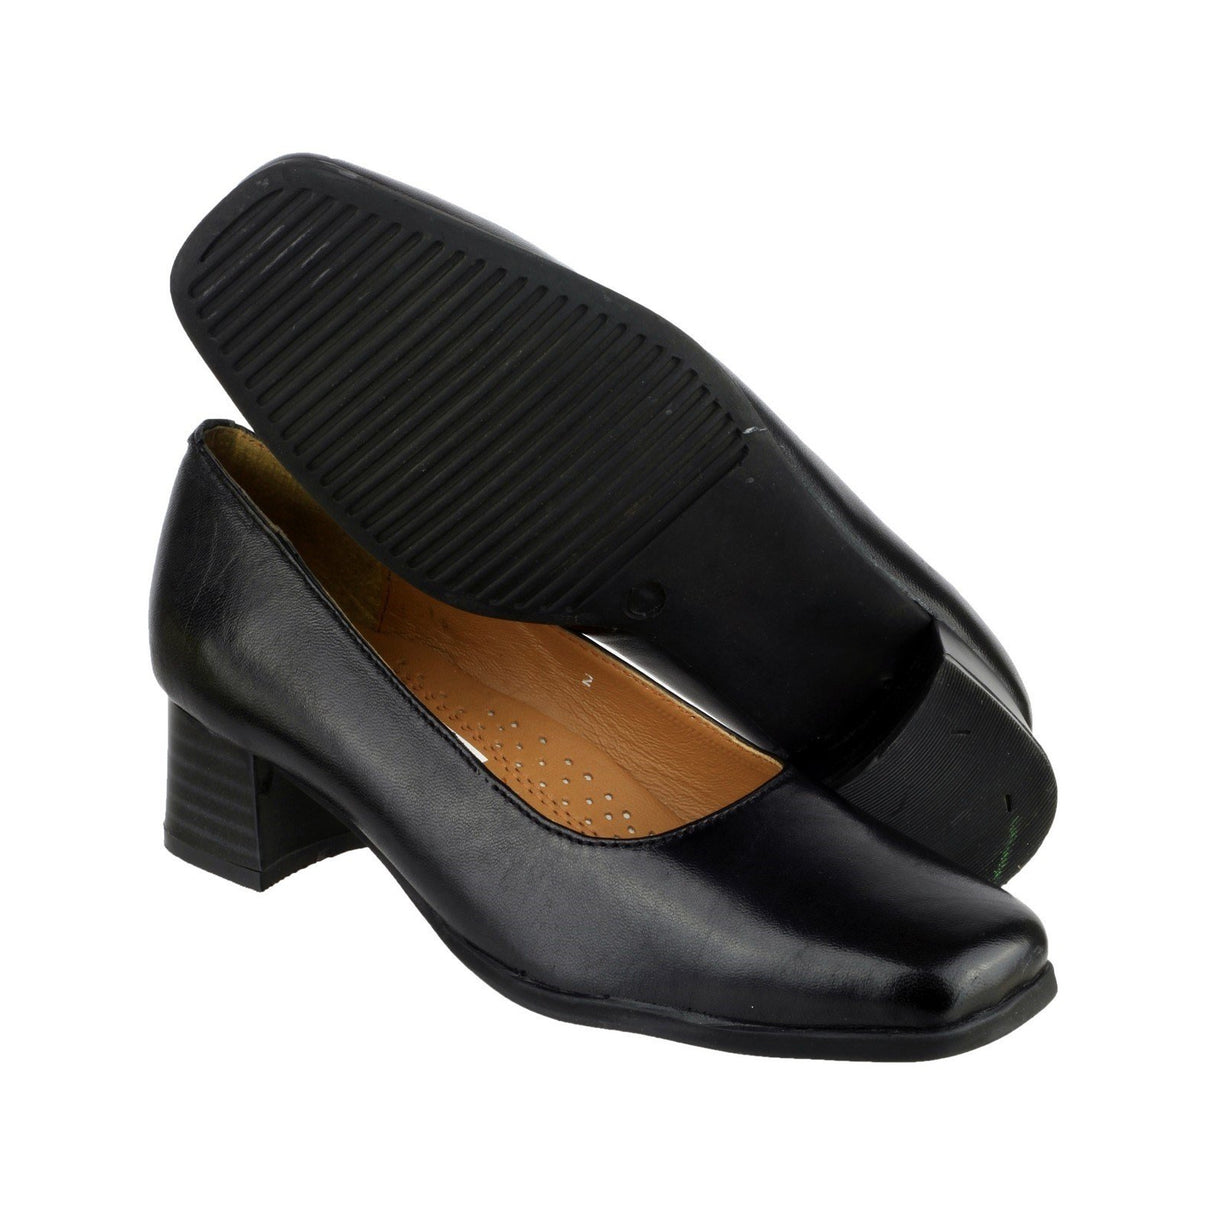 Amblers Walford Ladies Slip-on Court Shoes